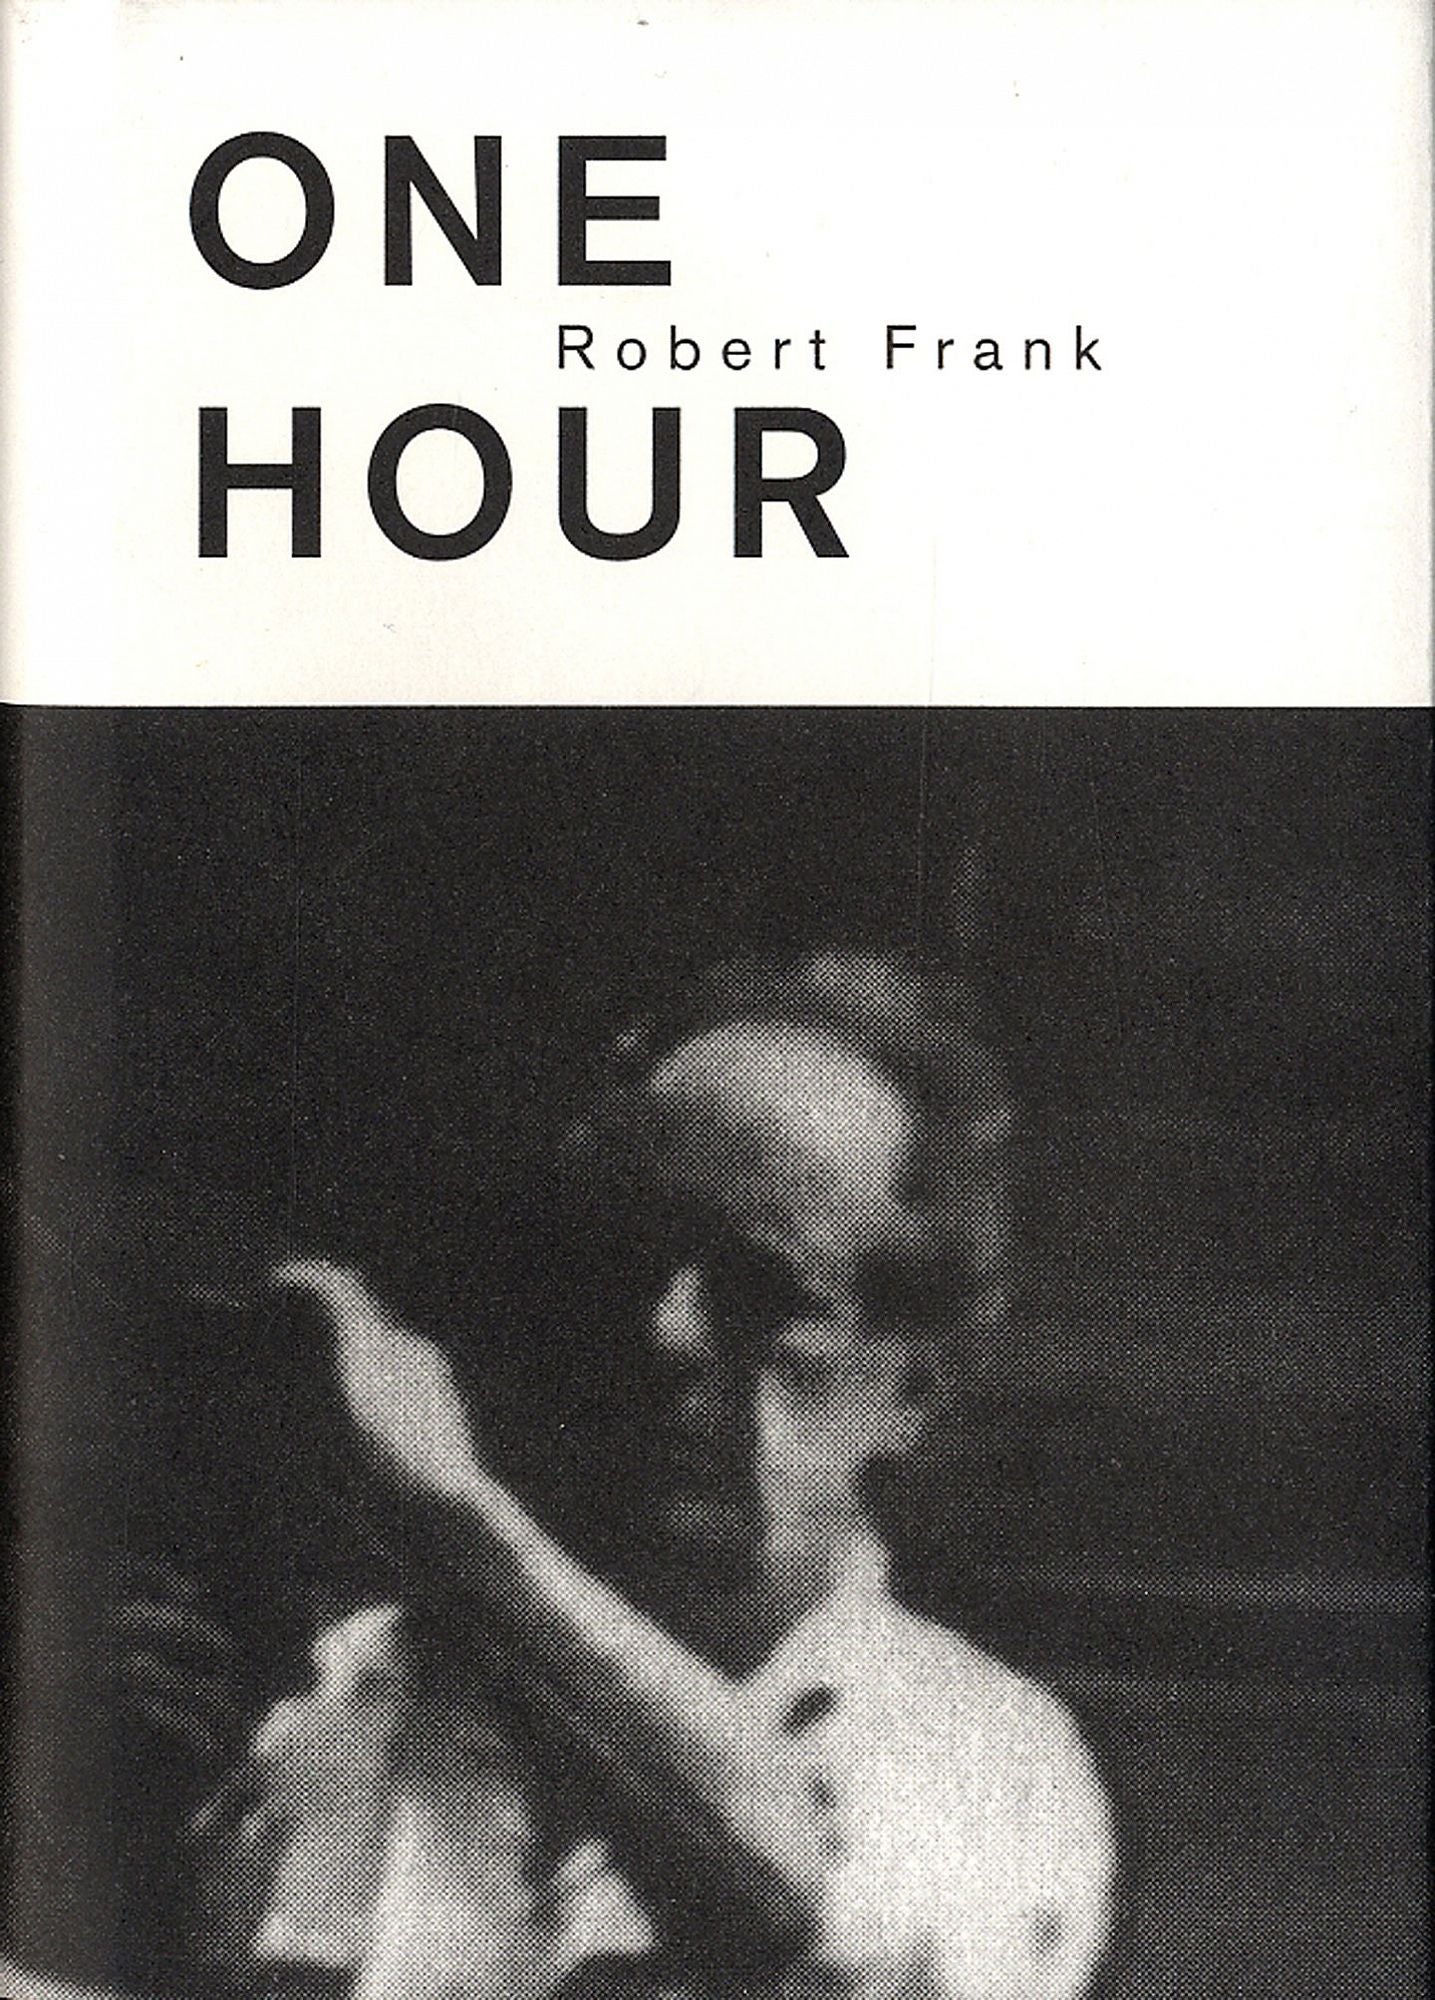 Robert Frank: One Hour (Steidl)